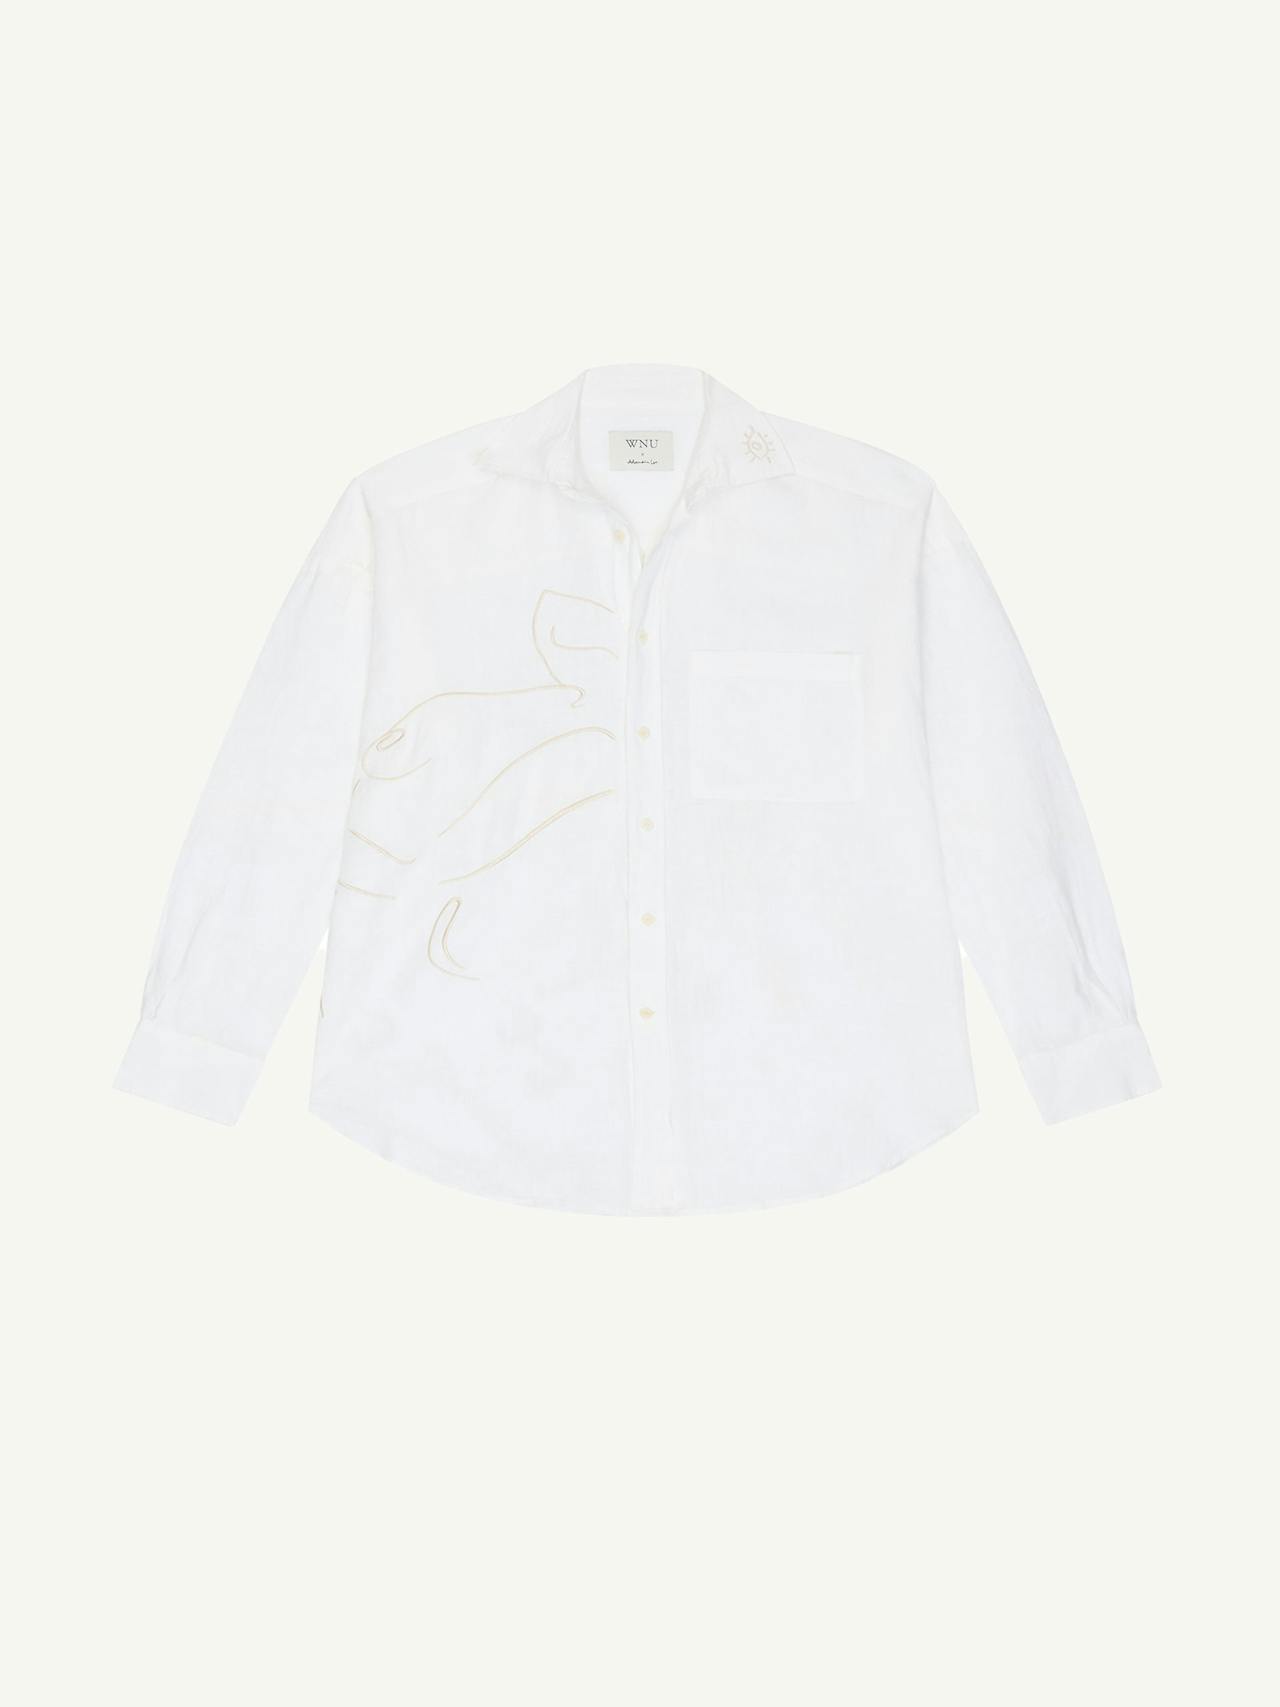 The Weekend: Linen, White shirt x Alexandria Coe